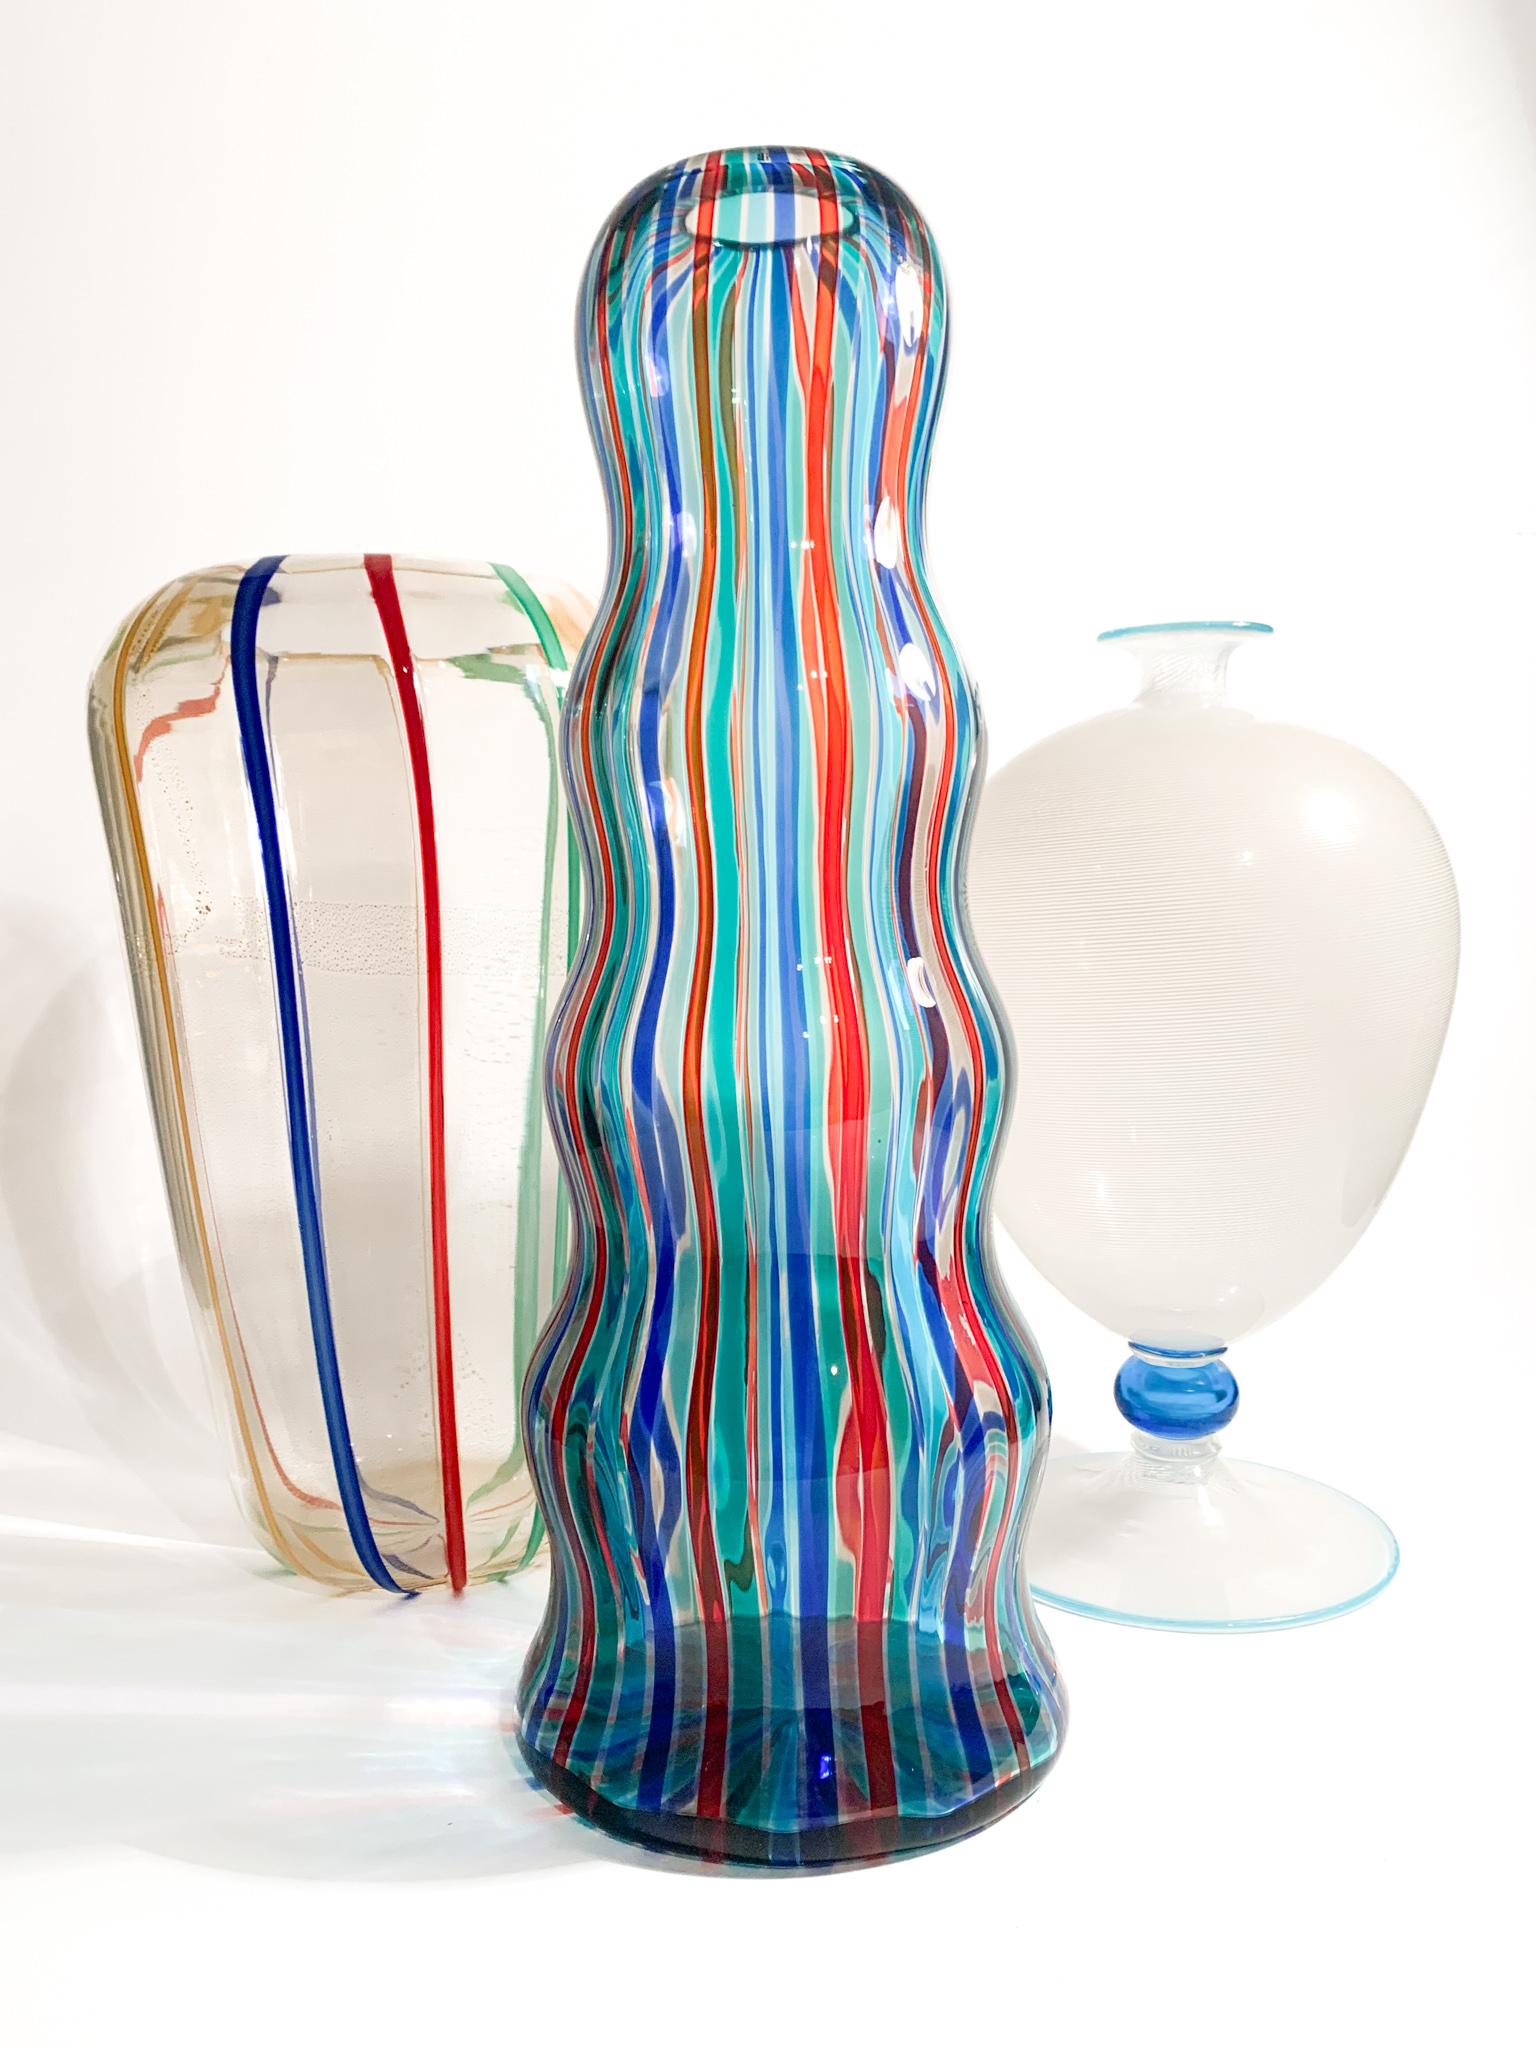 'Arado' Vase by Alessandro Mendini for Venini from 1988 For Sale 10